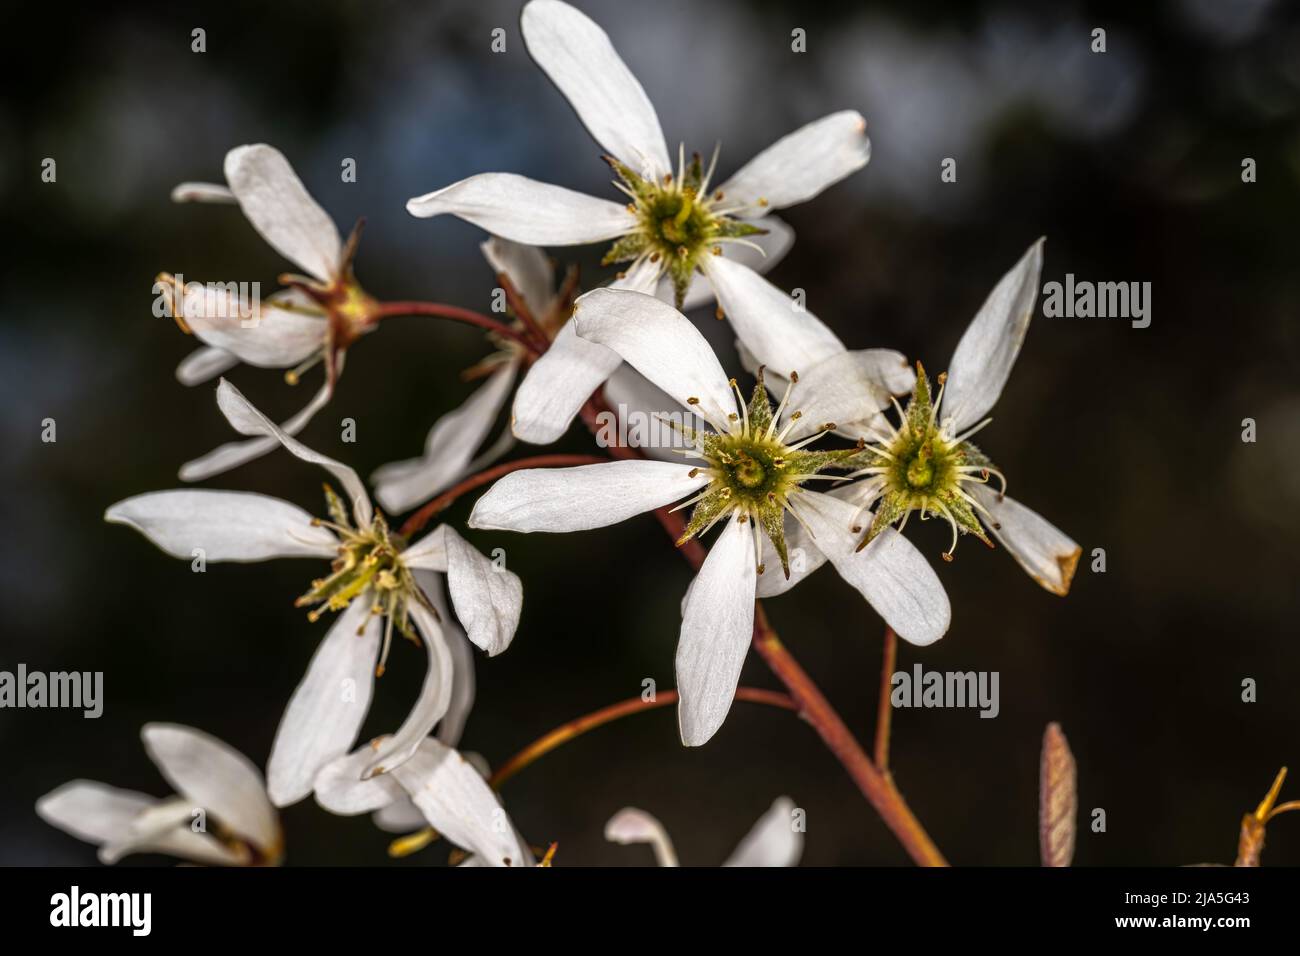 Flowers of Serviceberry 'Princess Diana' (Amelanchier x grandiflora) Stock Photo